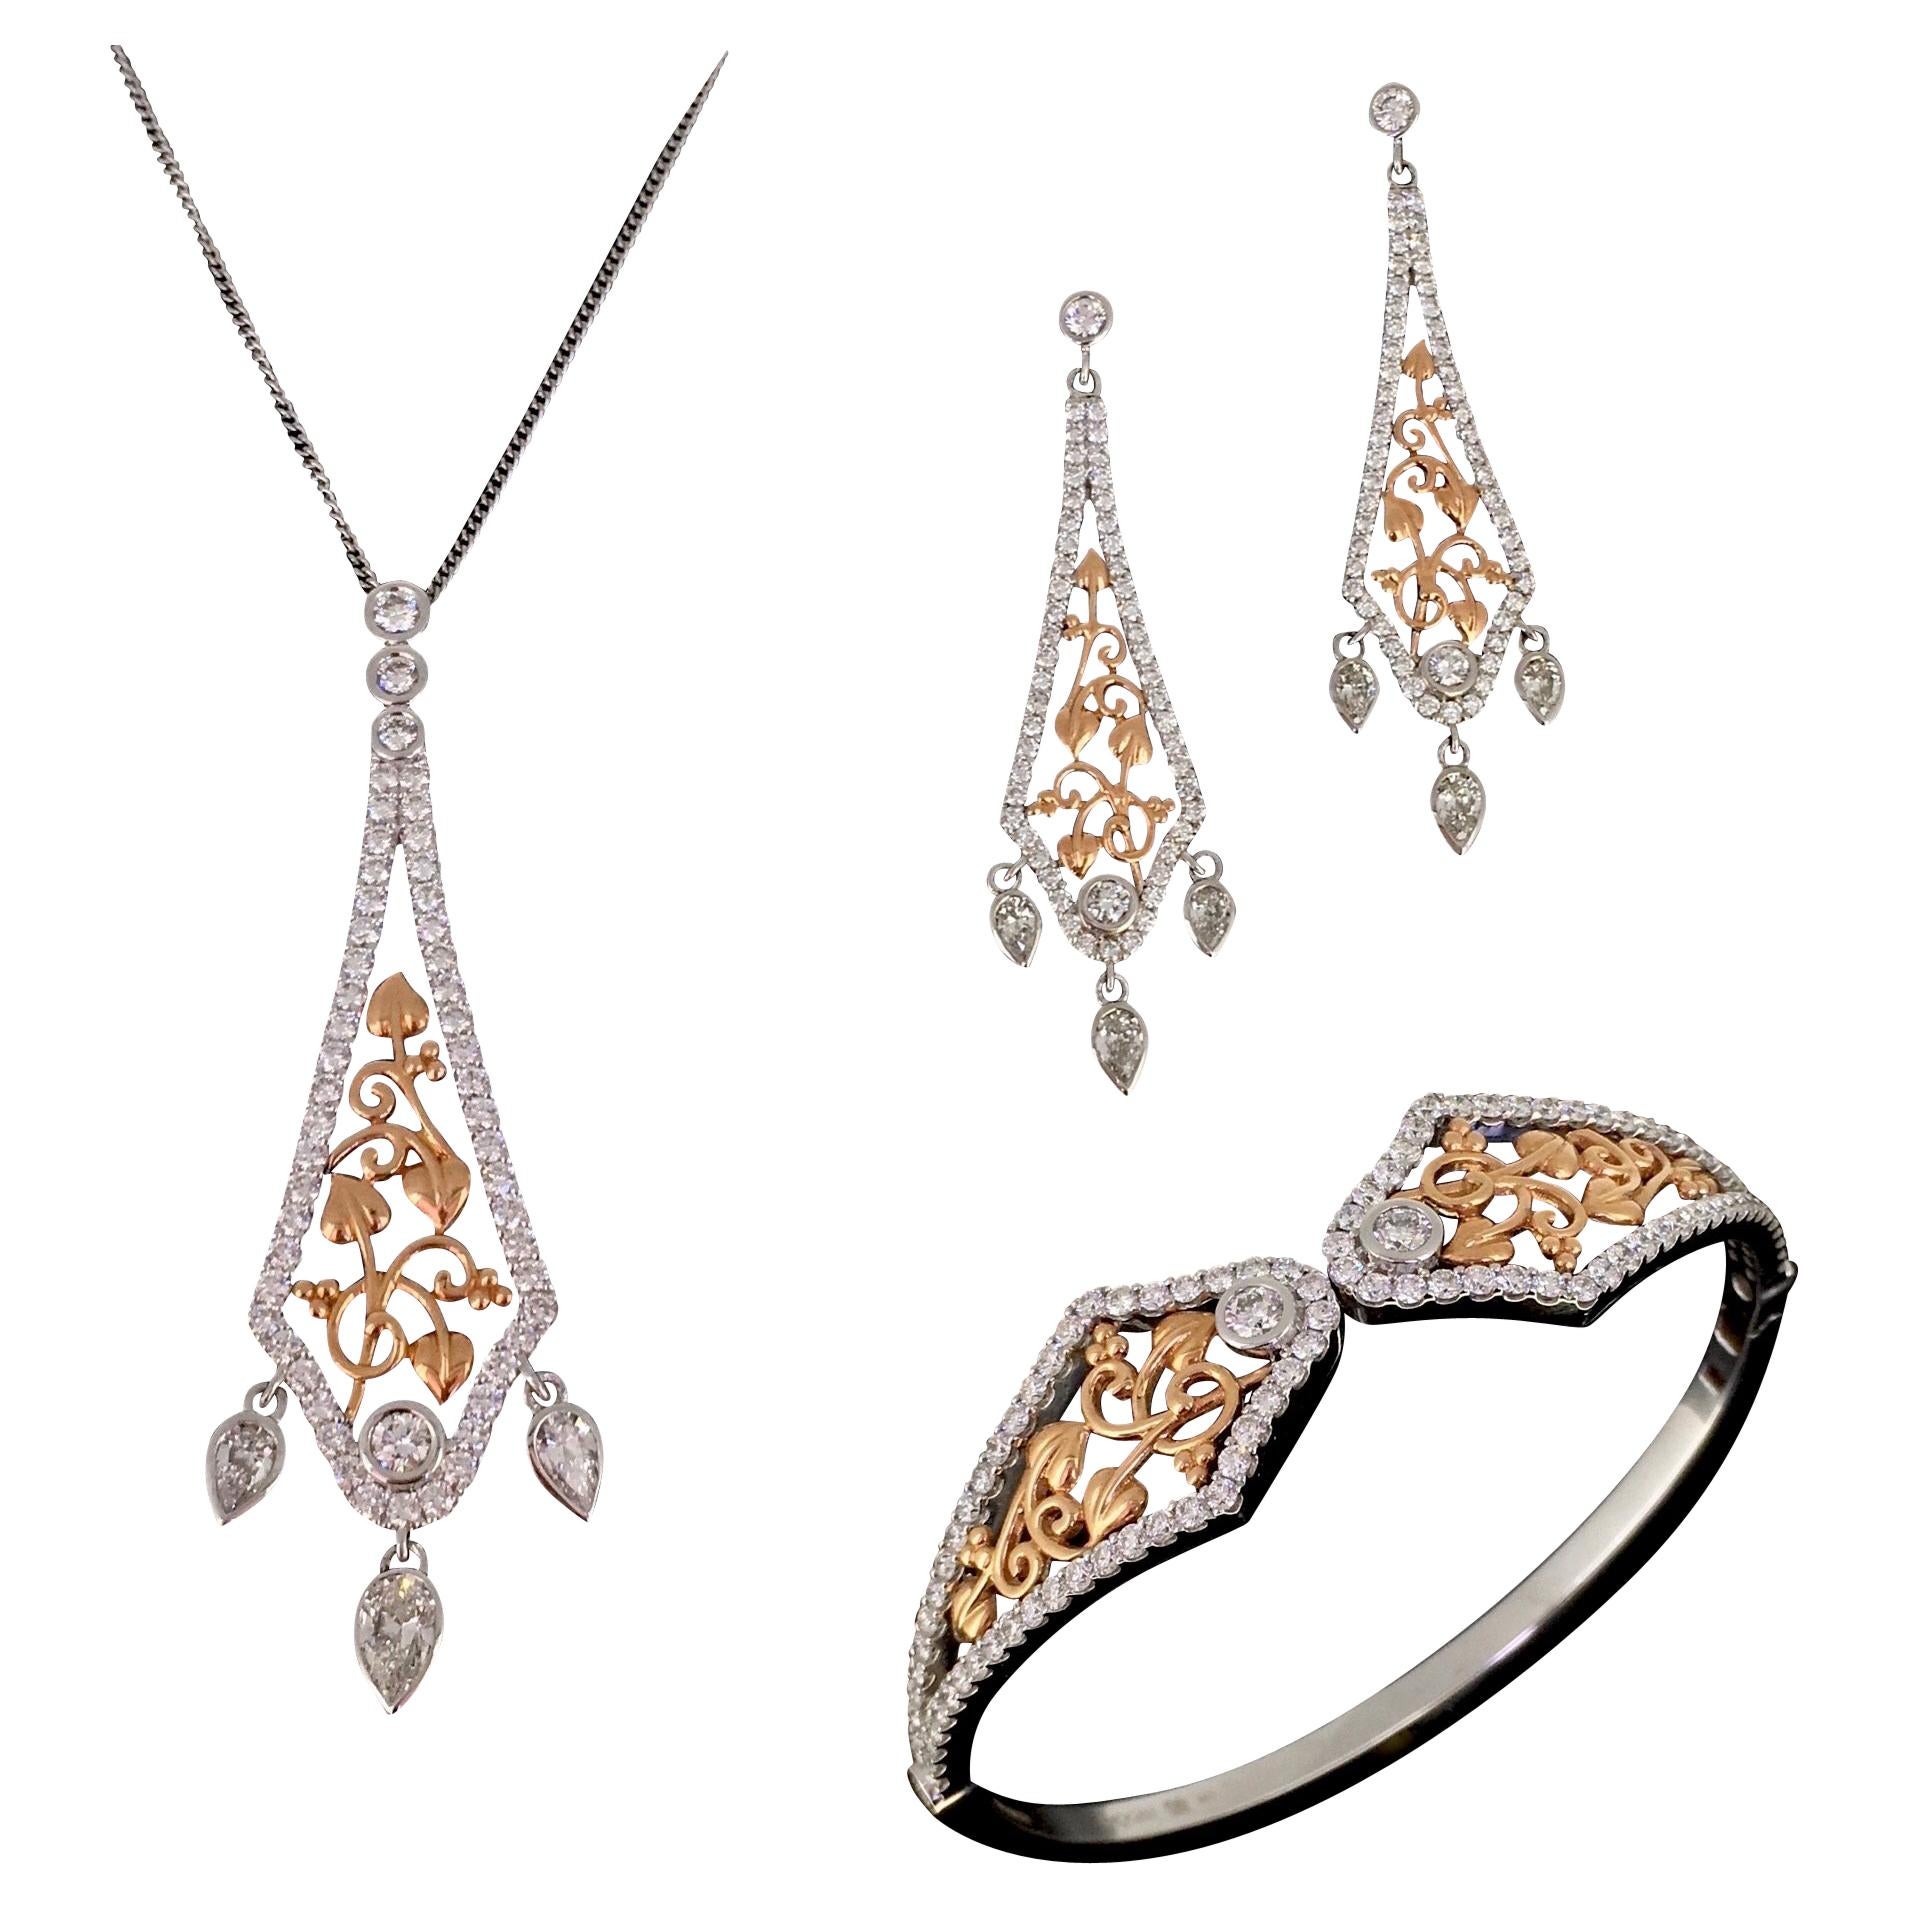 Clogau Diamonds ”Debutante” White Rose Gold Cuff Earrings Necklace Jewellery Set